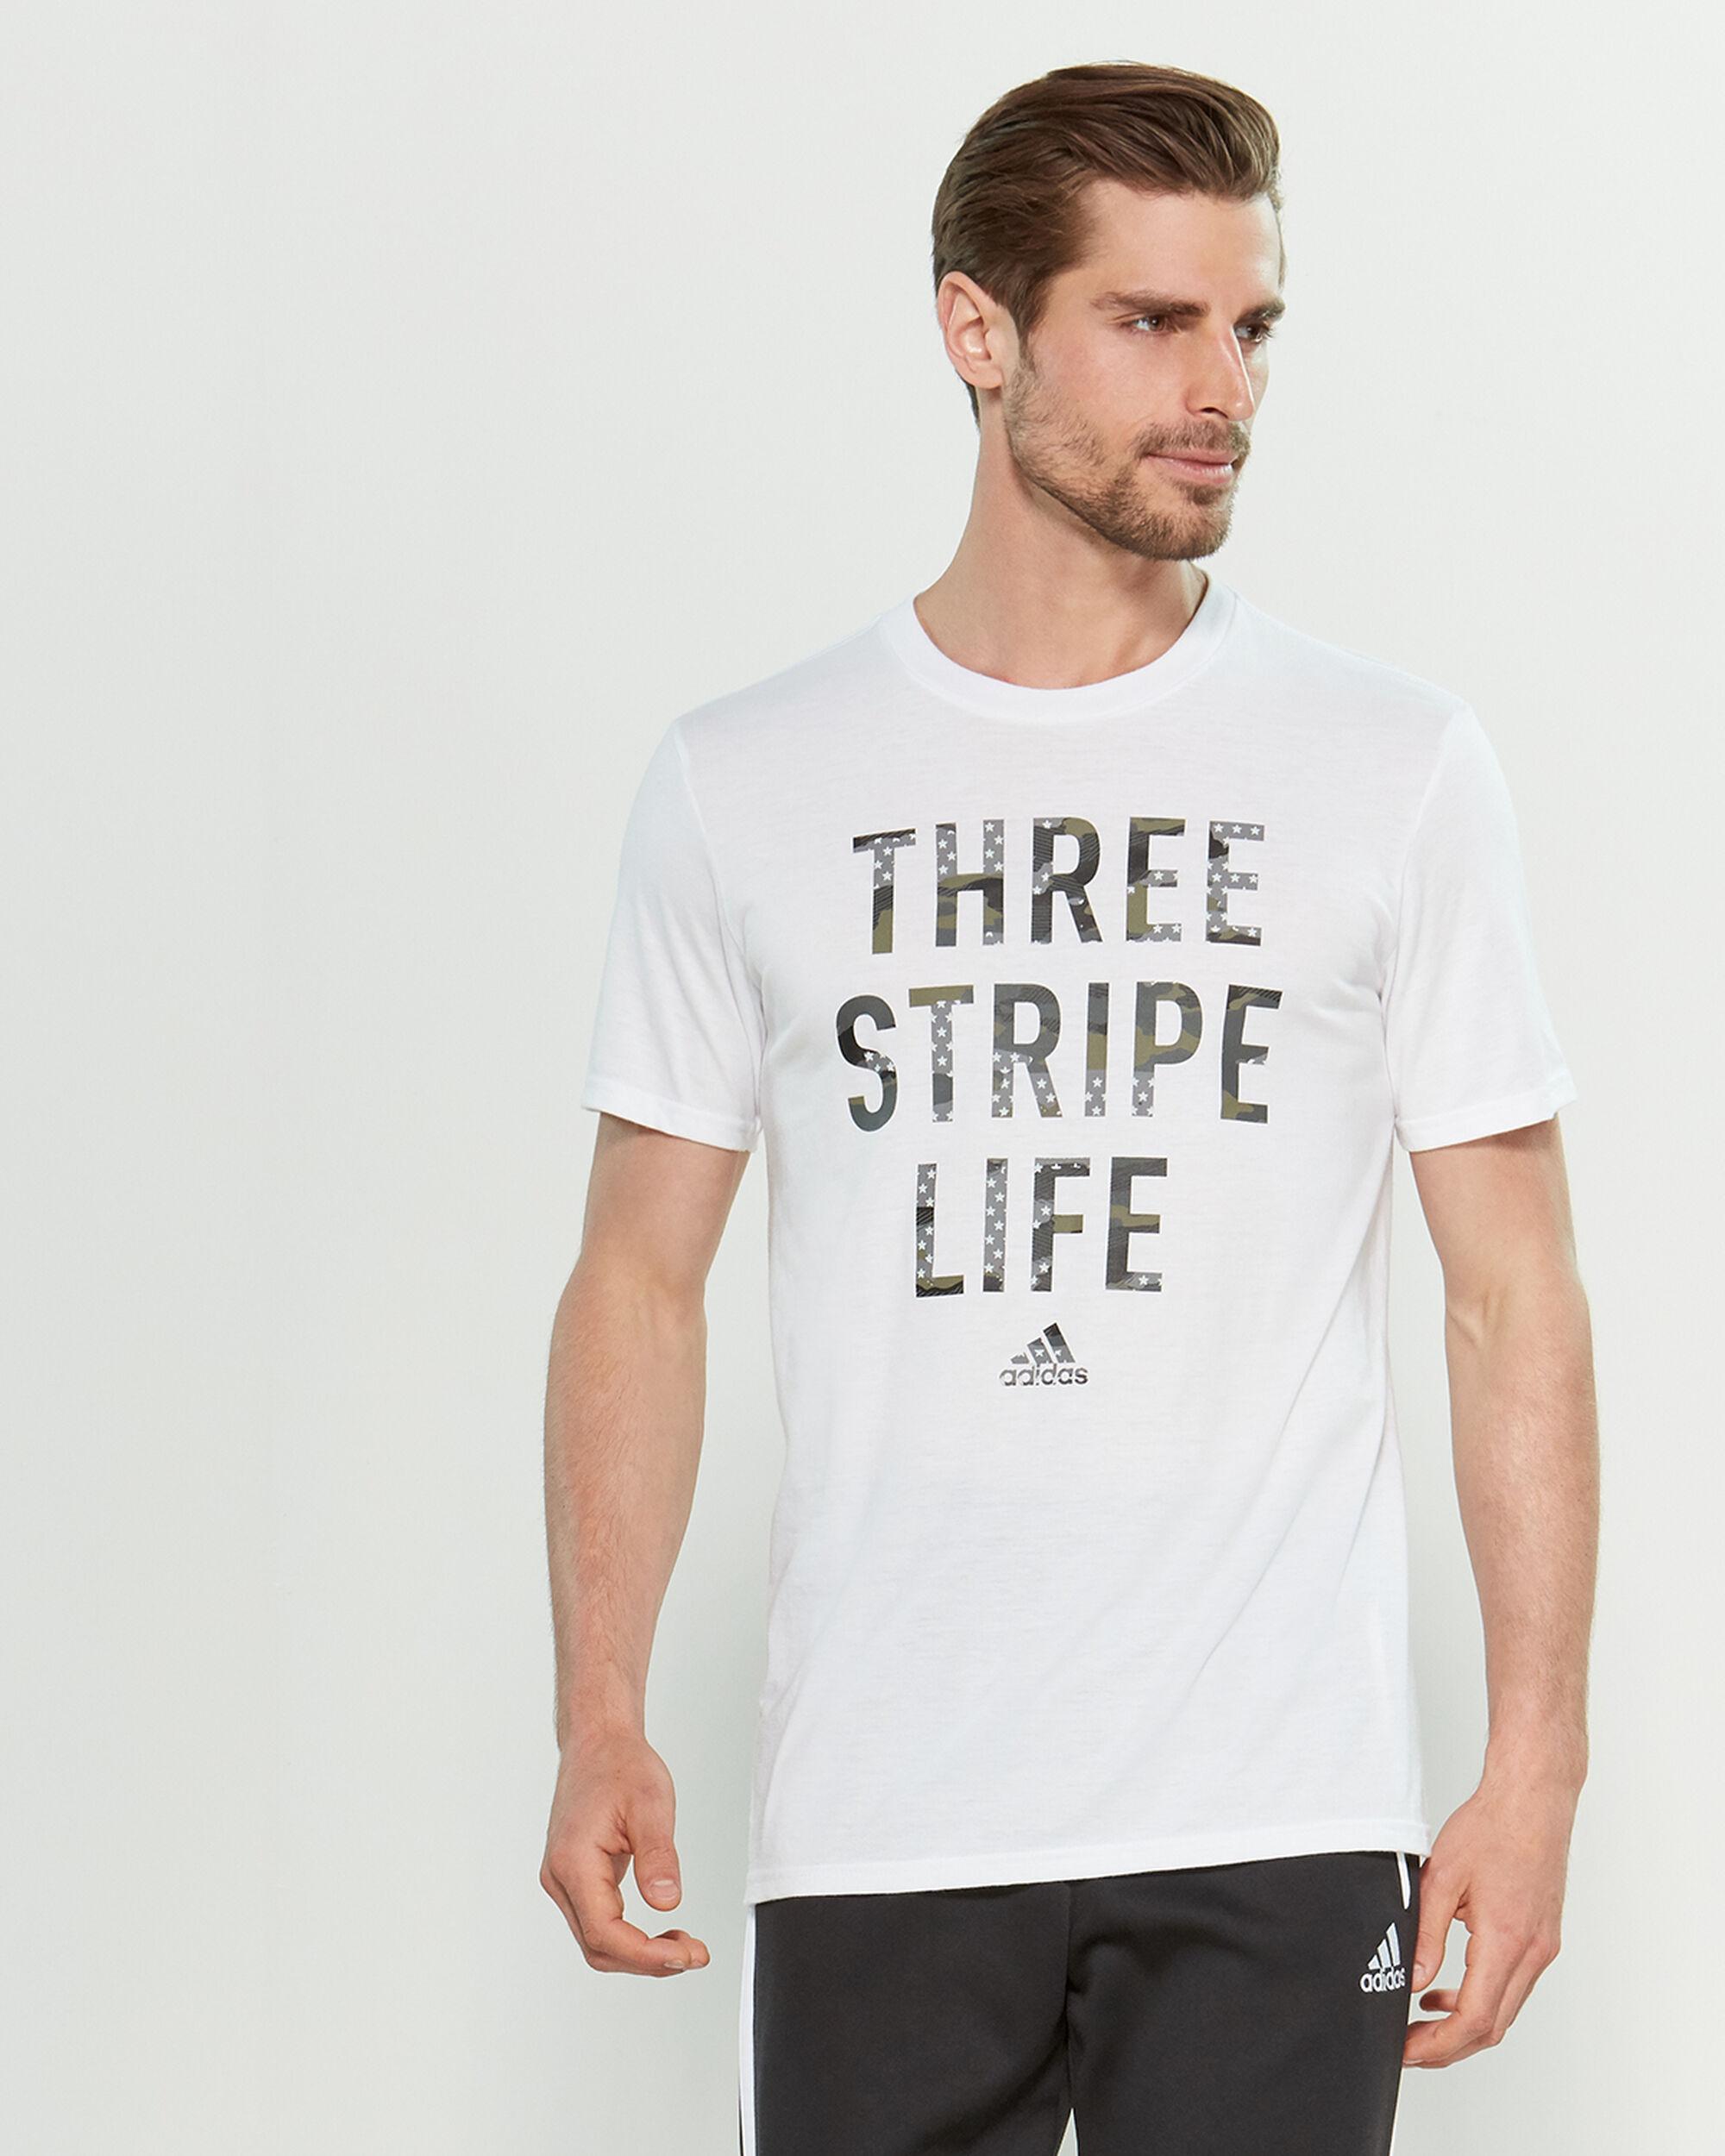 3 stripe life shirt